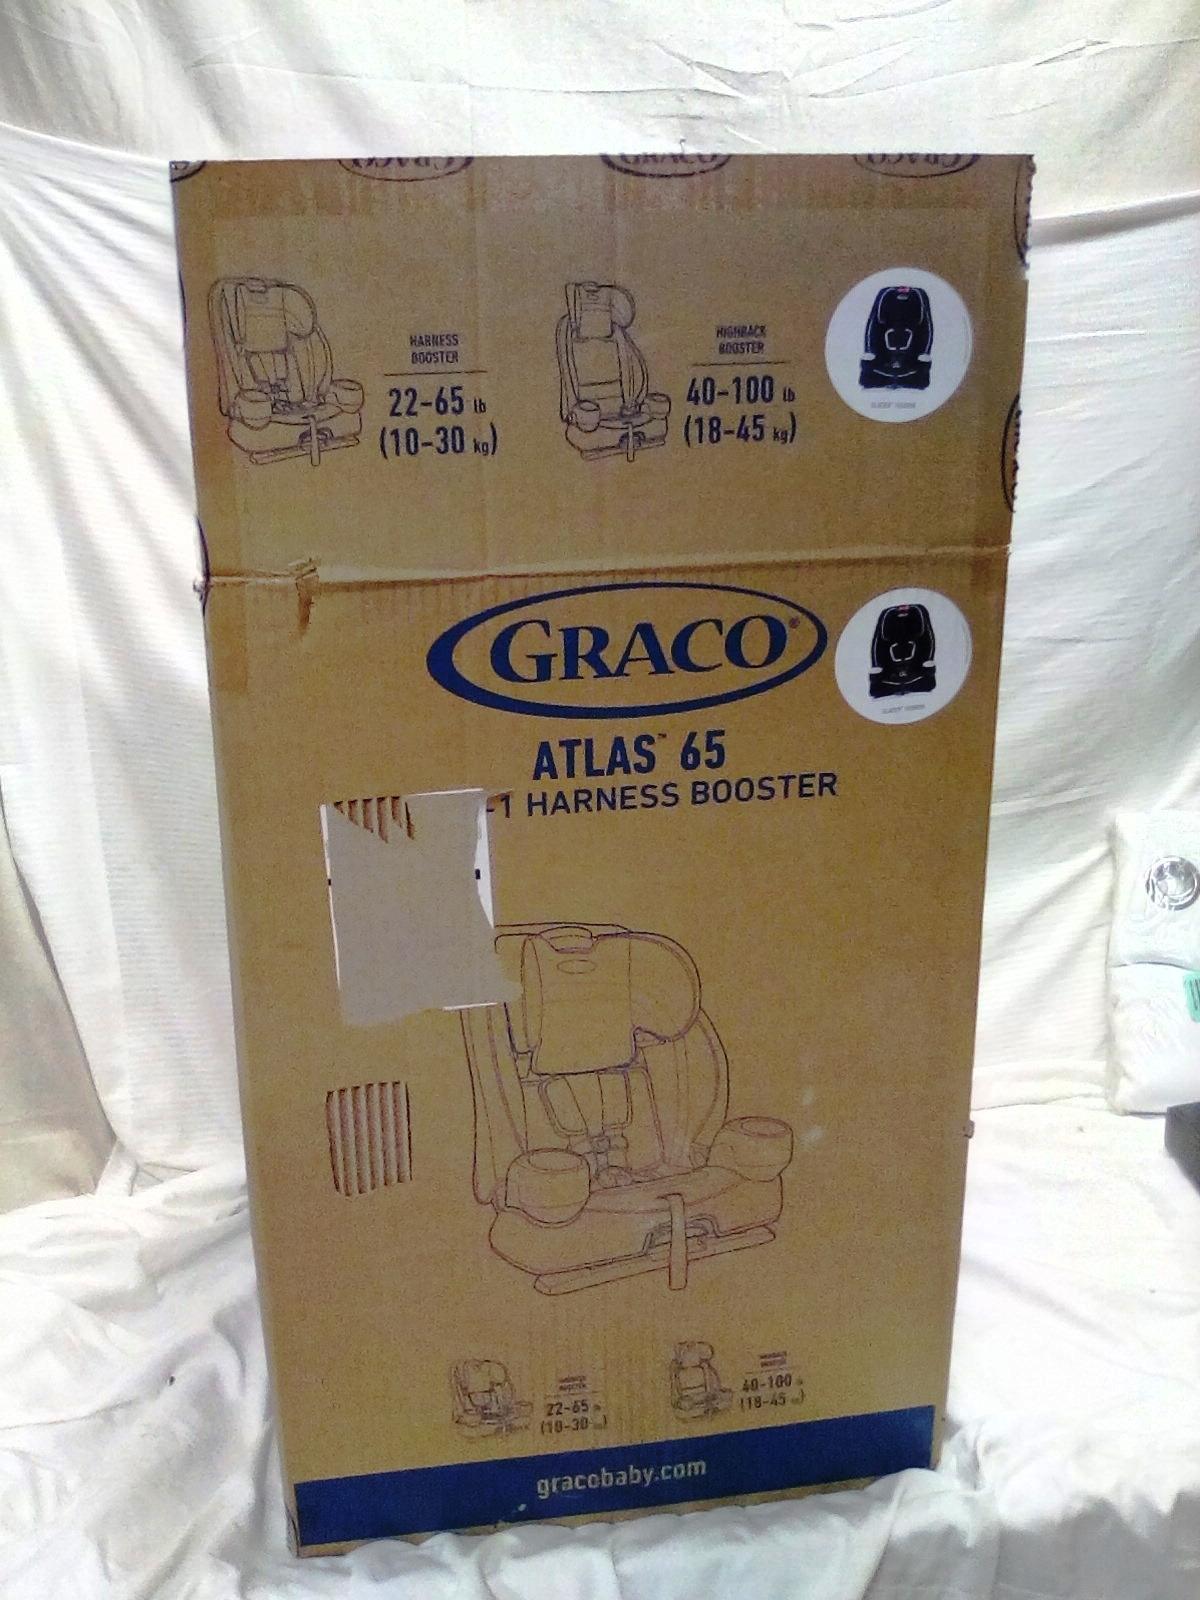 Graco Atlas 65 2-in-1 Harness Booster